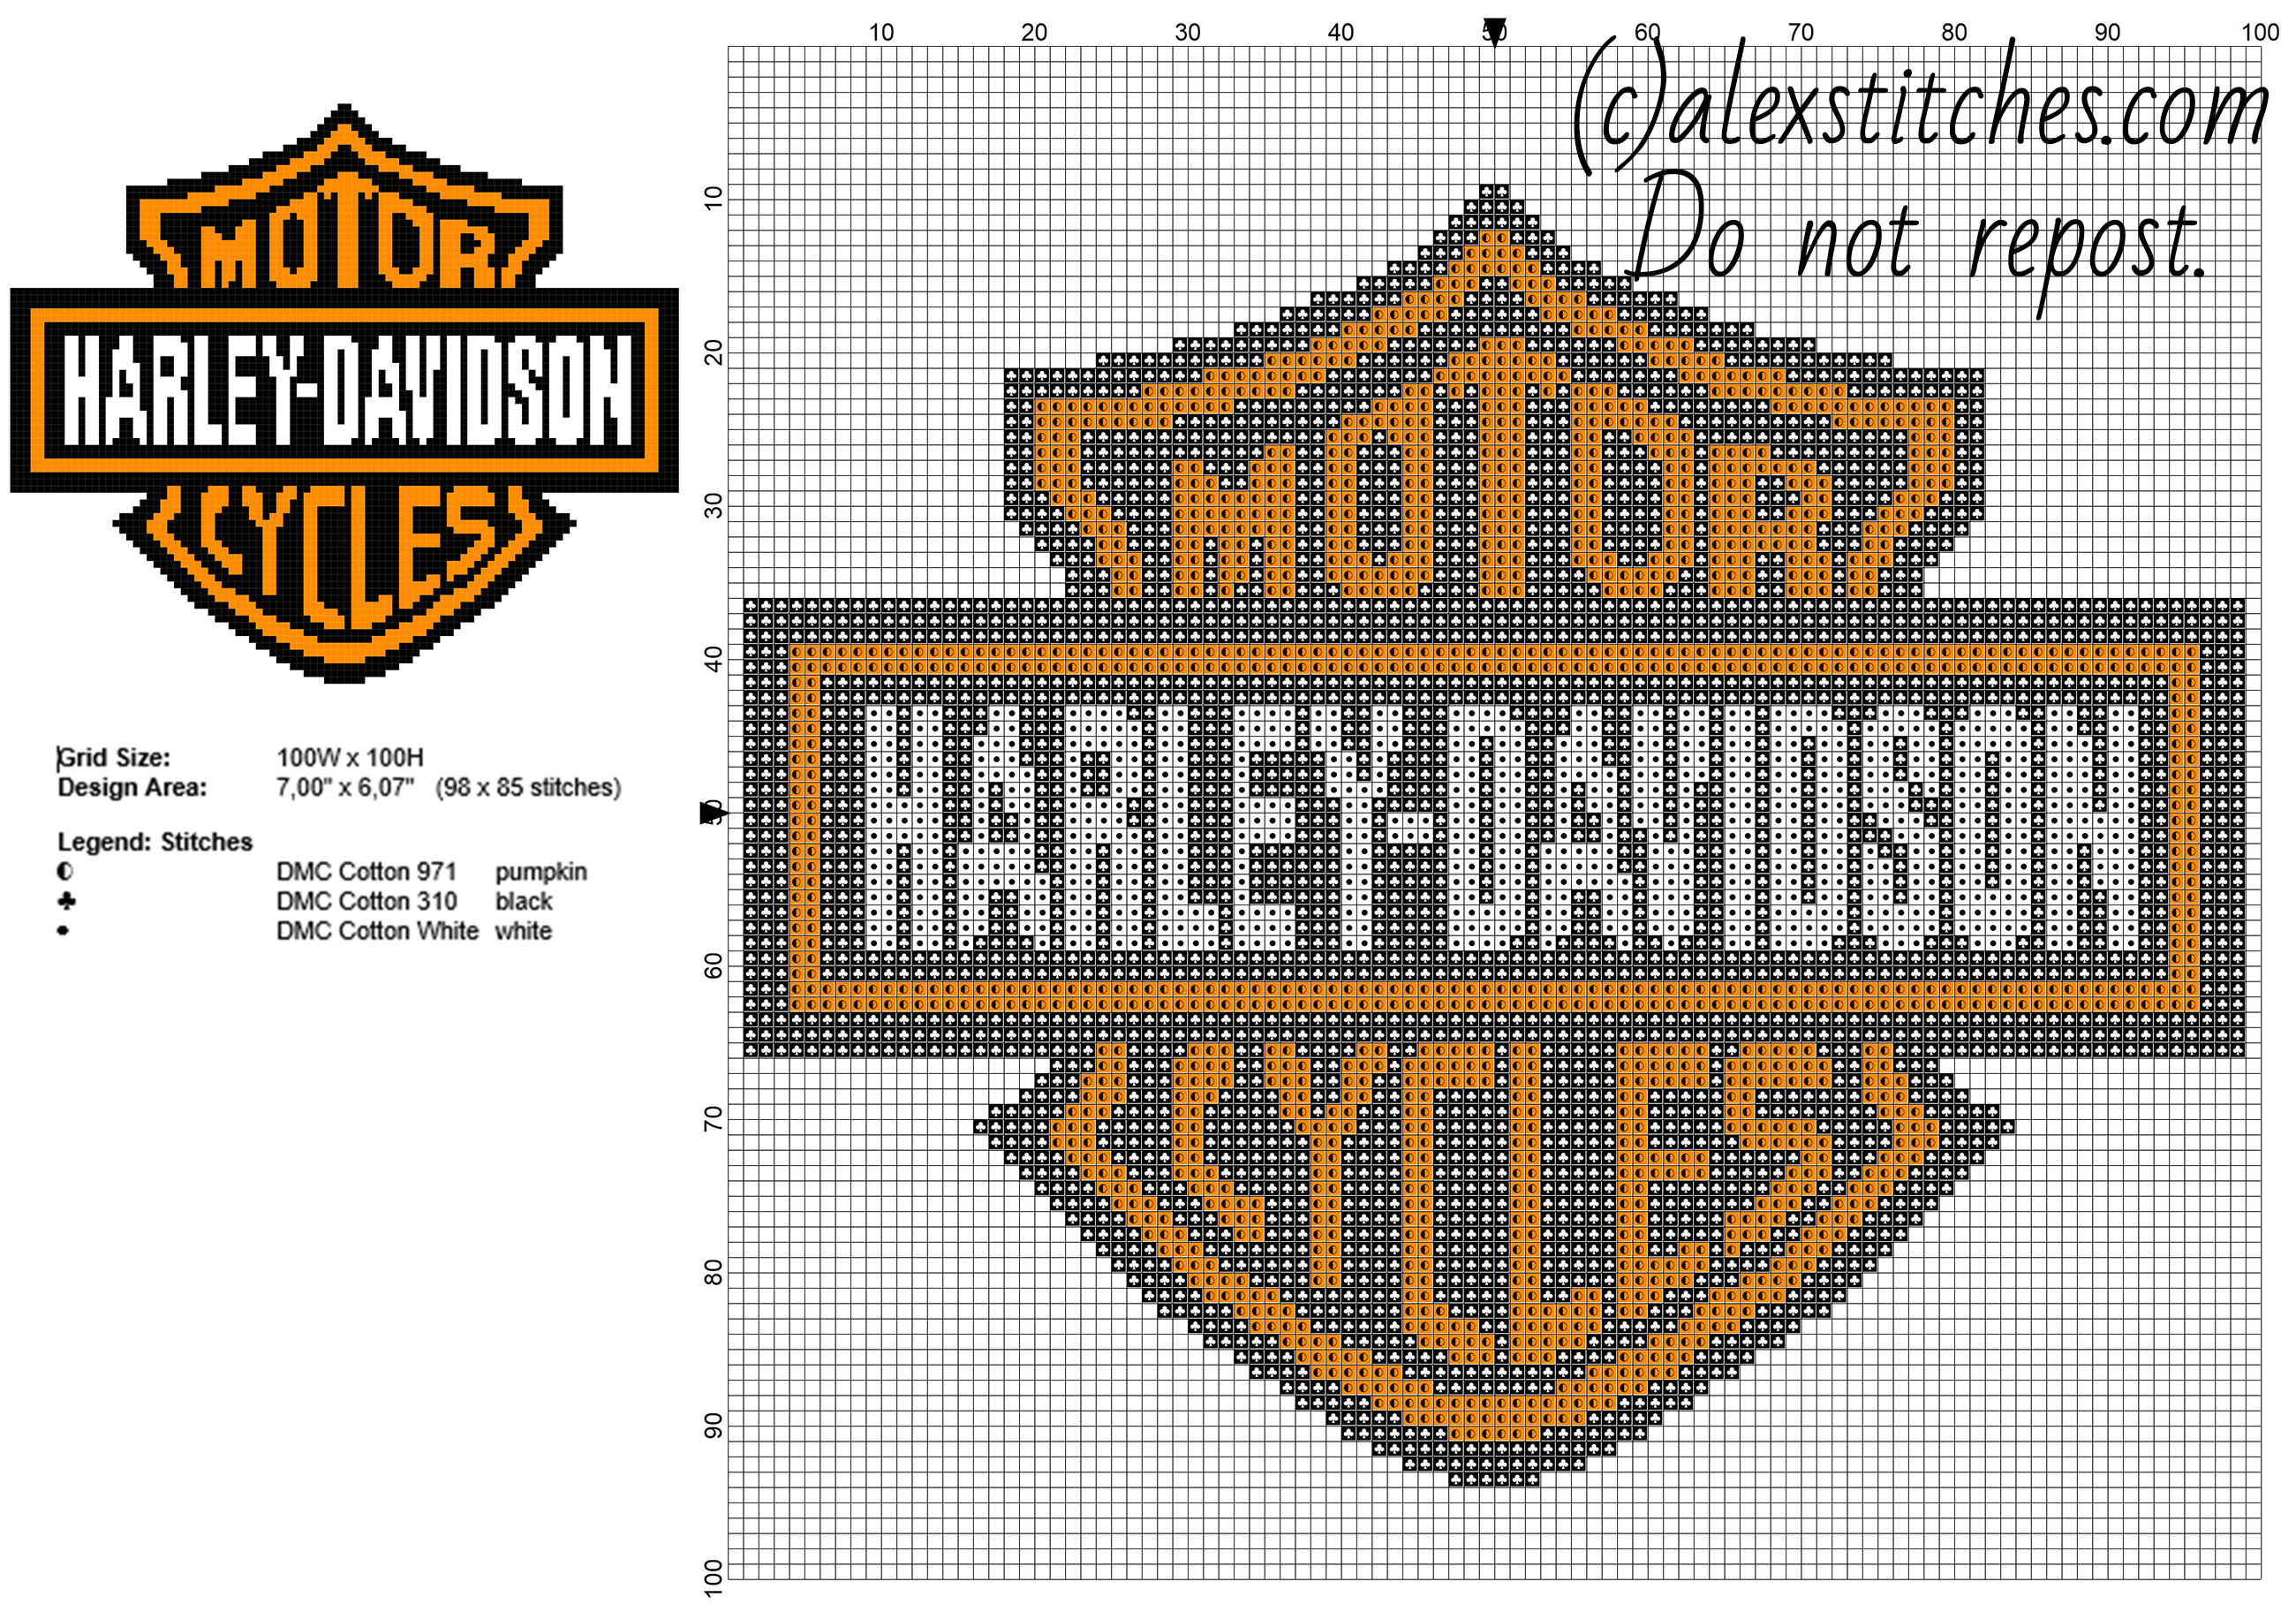 Harley Davidson Motorcycles logo free cross stitch pattern